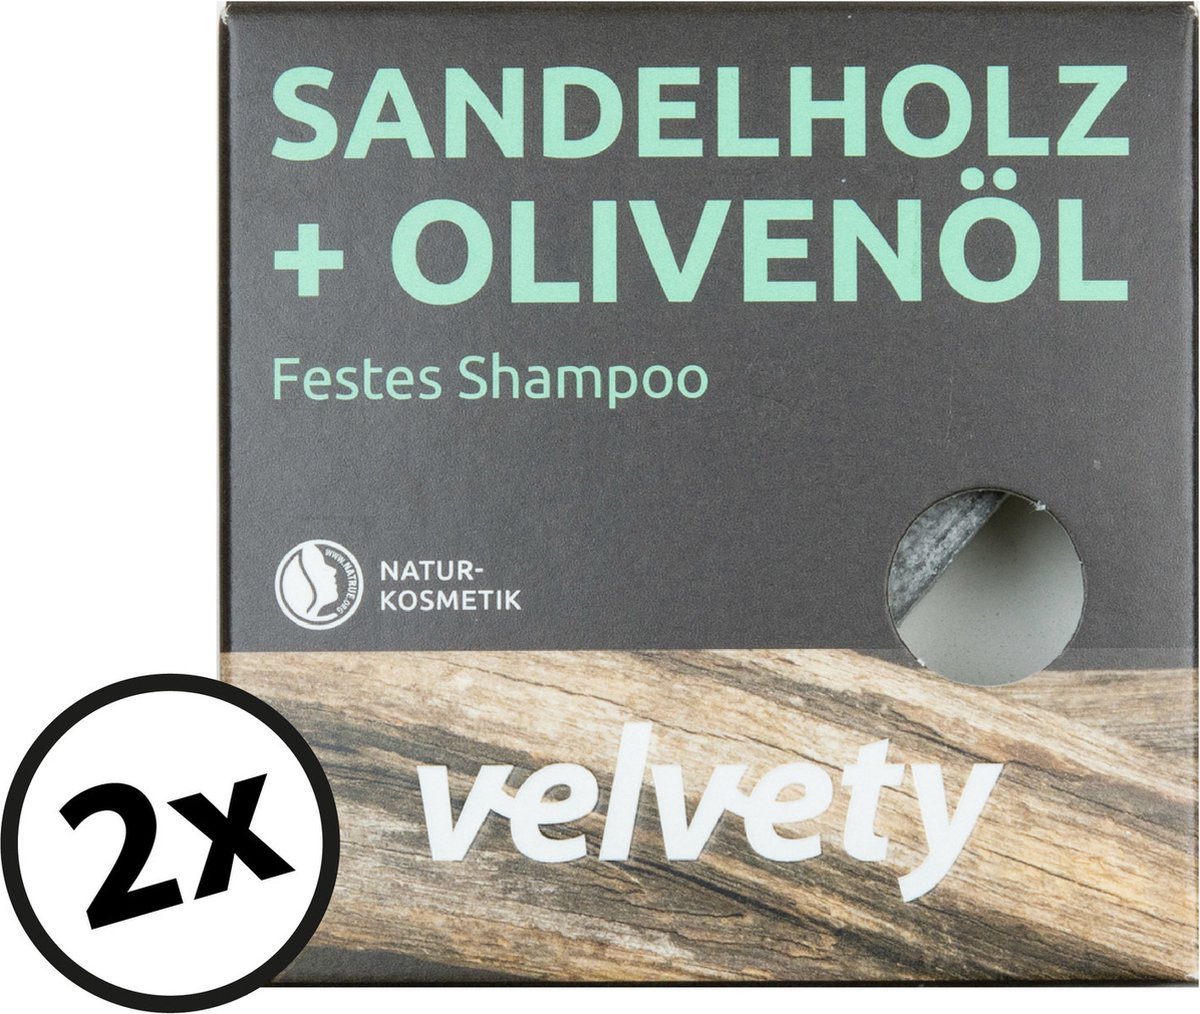 Velvety Shampoo Sandalwood + Olive Oil - 60gr - Solid Shampoo Bar - Hair Care - Eco-friendly - Natural Ingredients